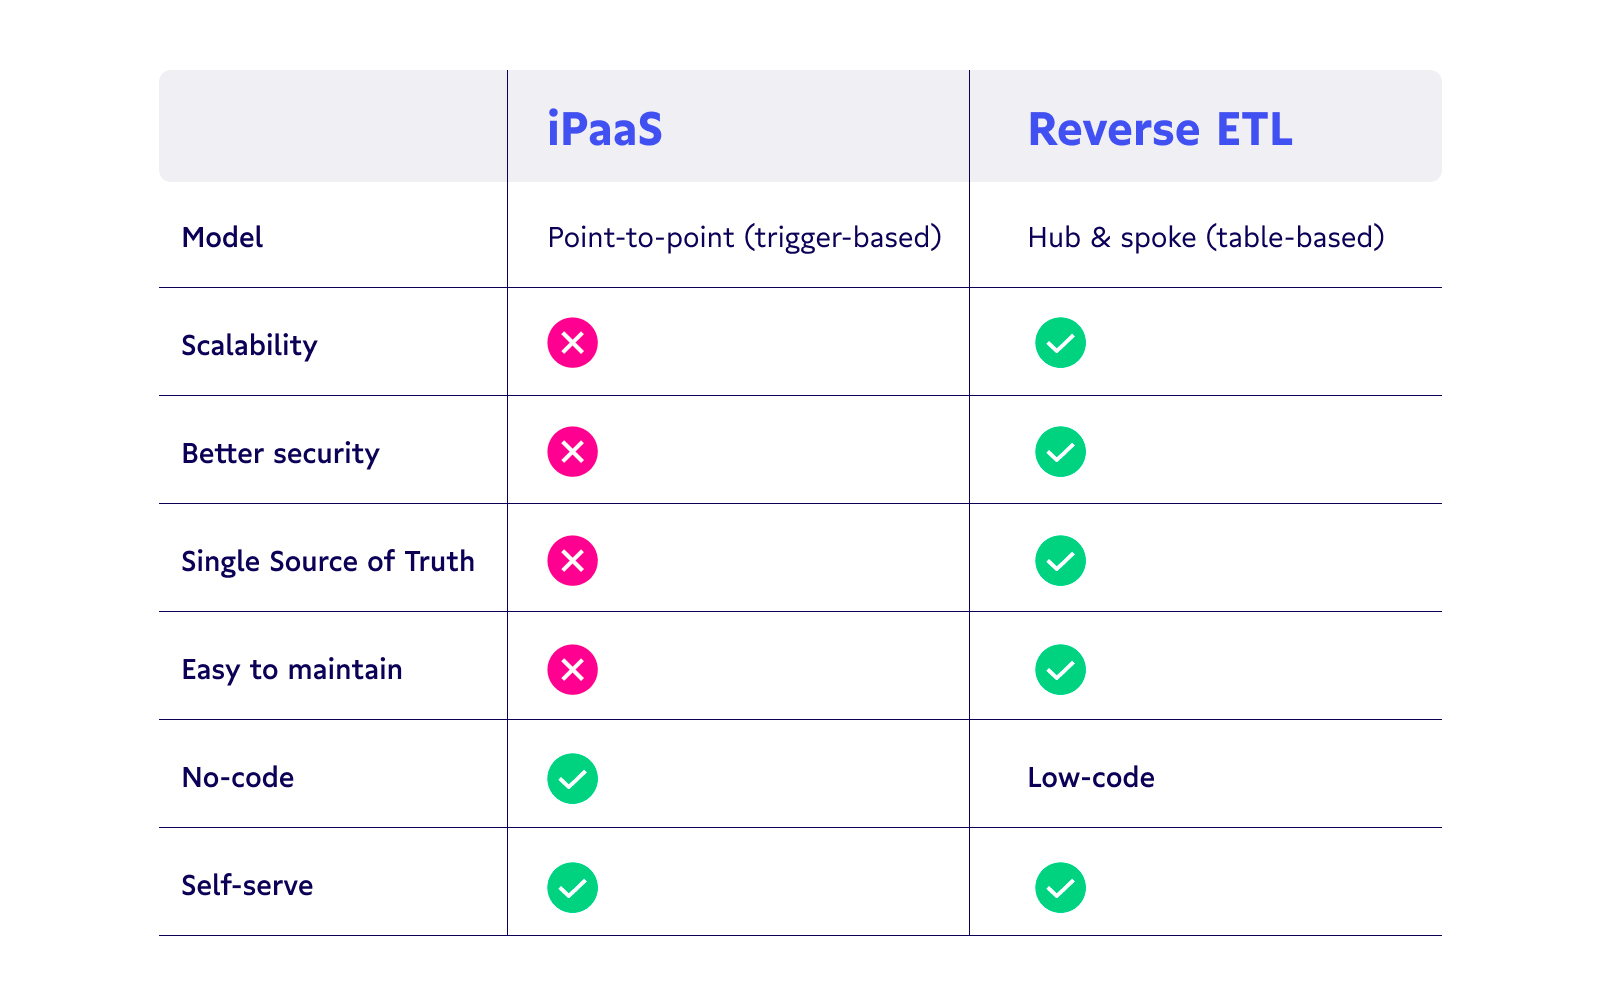 iPaaS vs Reverse ETL comparison